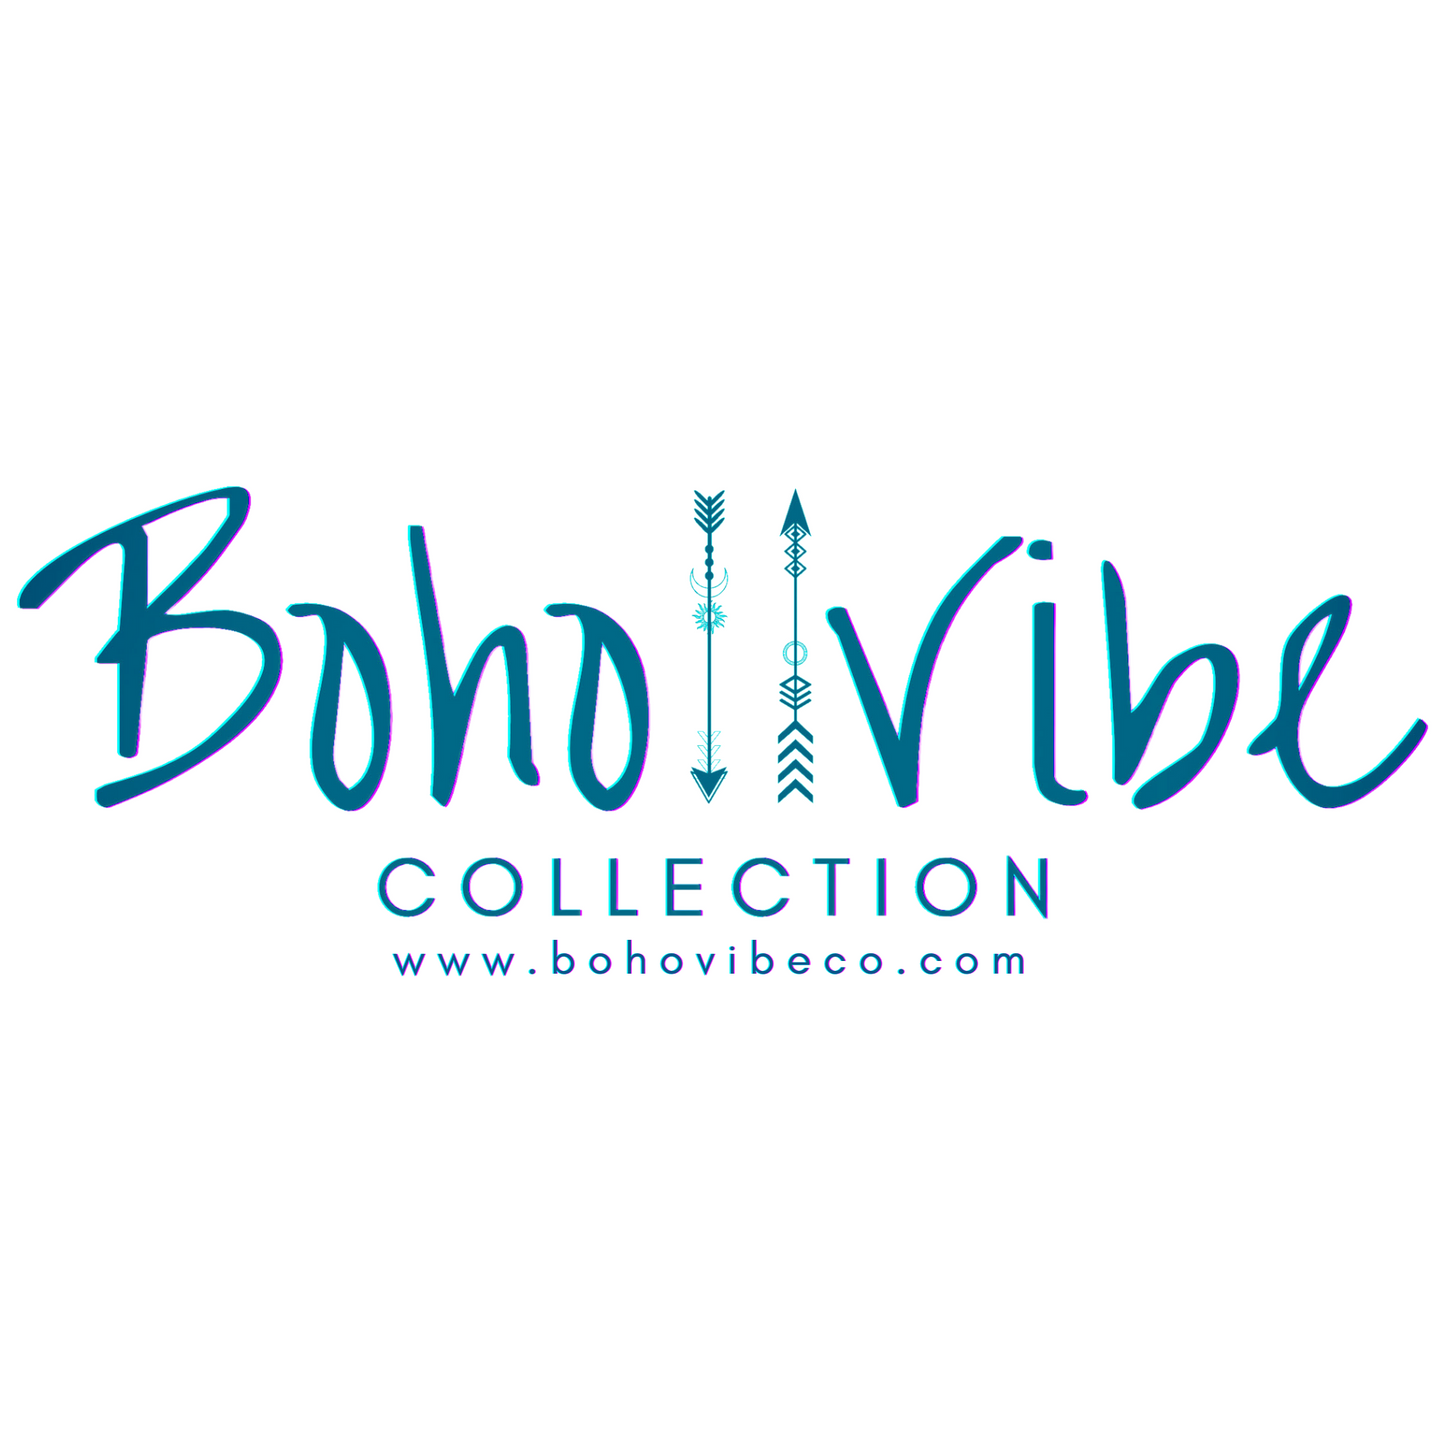 Boho ↡↟ Vibe Collection ↠ The Ike Oat Blue Sunglasses 